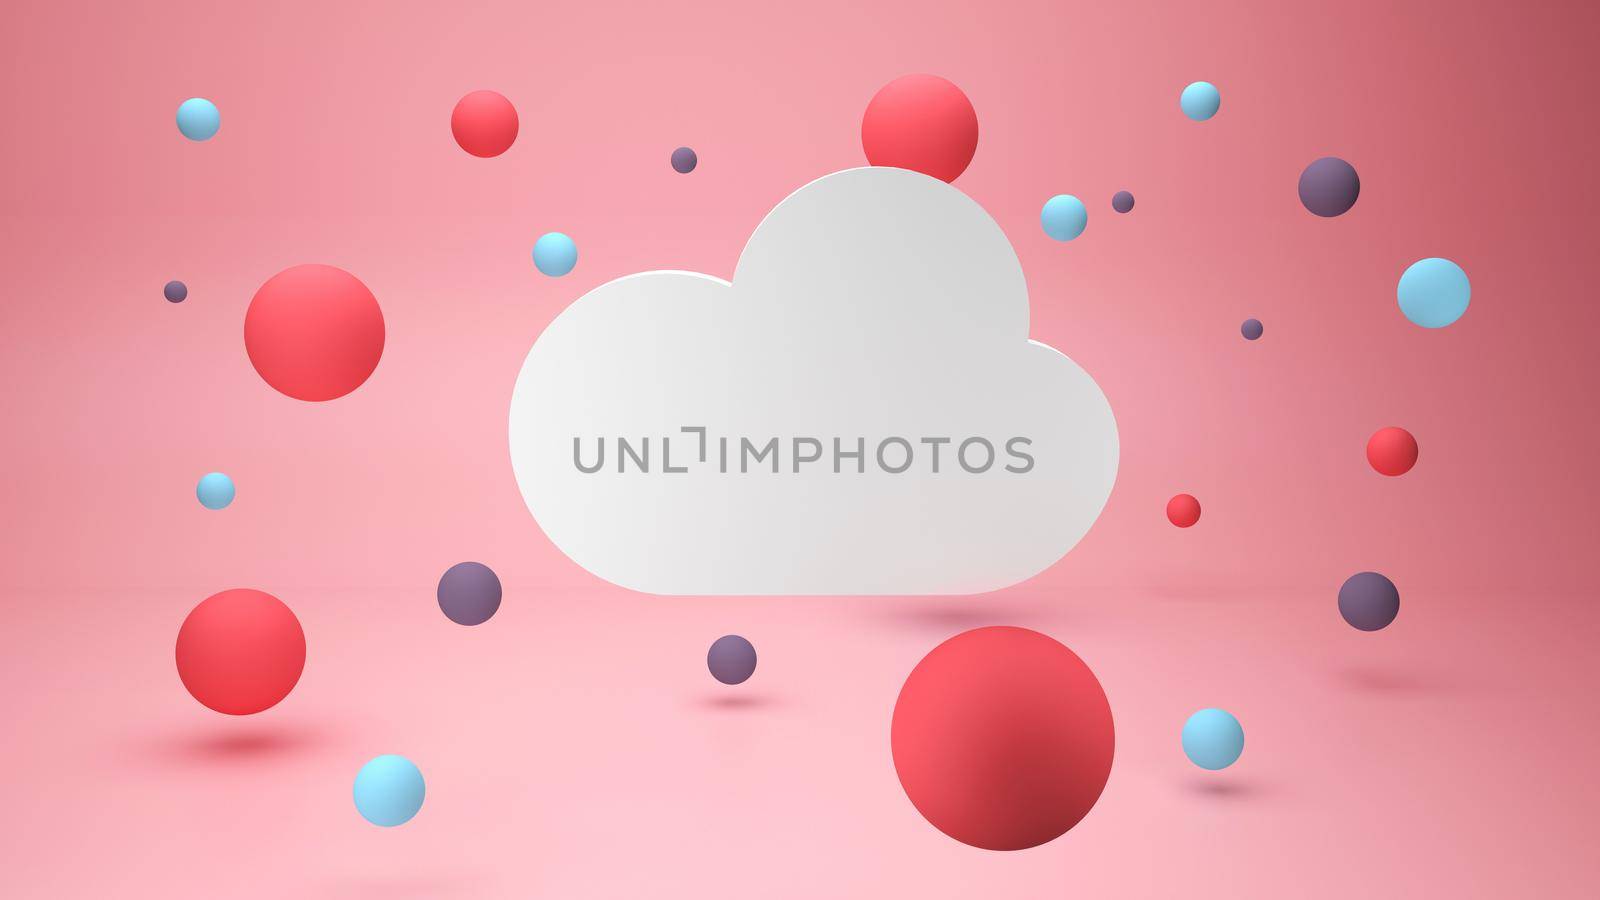 Cute clouds on pink background 3d render illustration